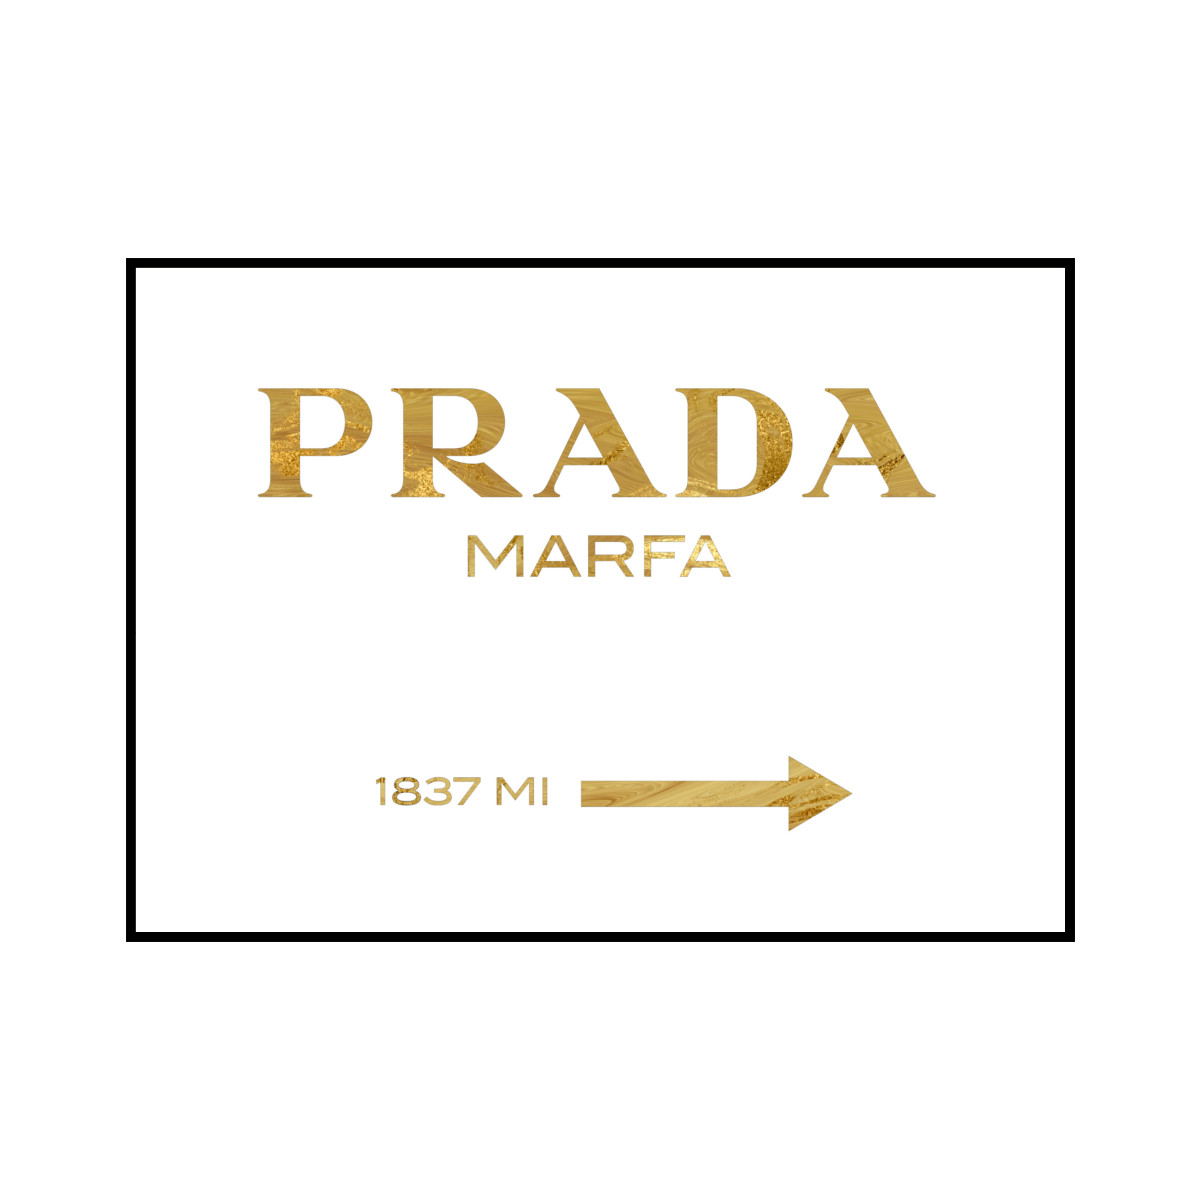 Prada Marfa 1837 Mi Gold Marble Poster Sd 000563 A2サイズ ポスター単品 State Of The Art Design